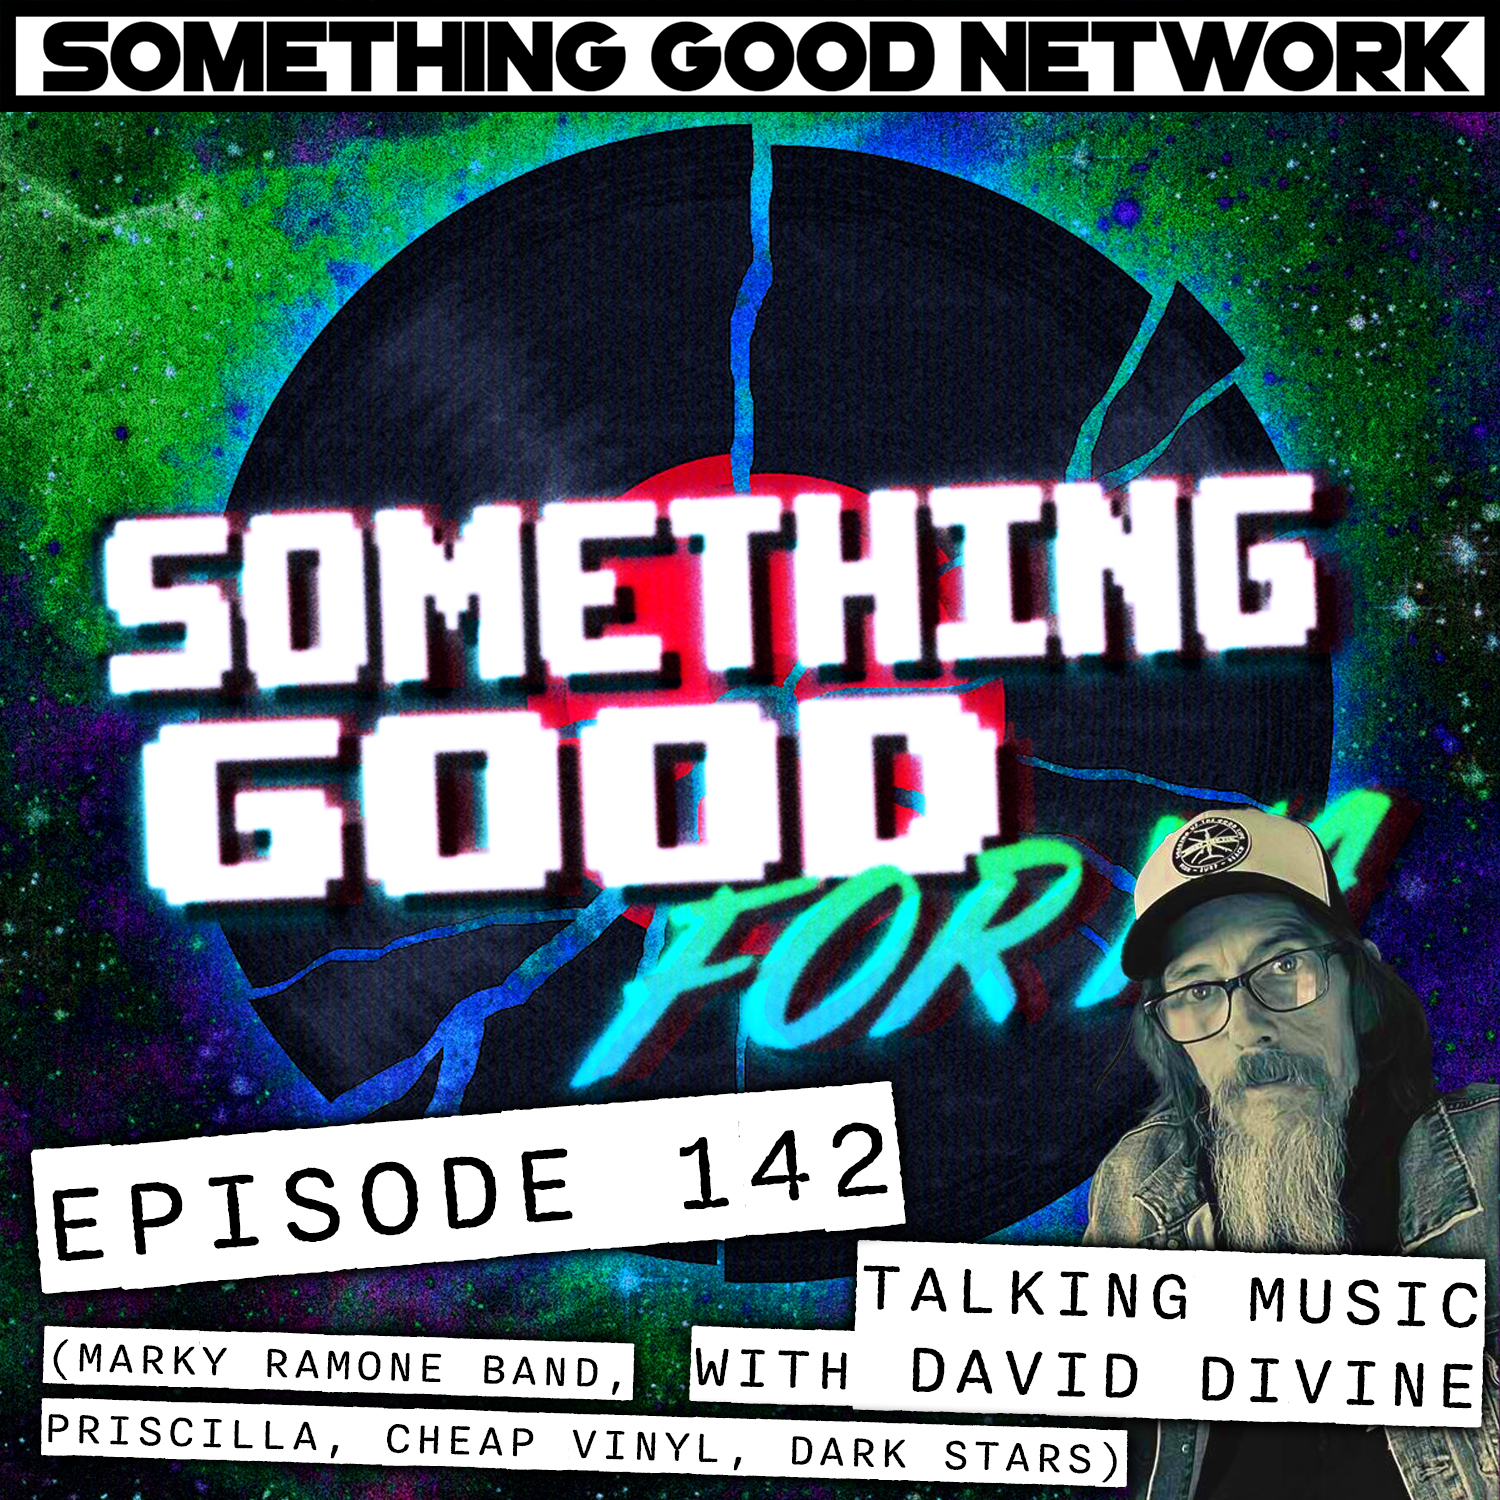 Episode 142 - Talking Music with David Divine (Marky Ramone Band, Priscilla, Cheap Vinyl, Dark Stars) hero artwork